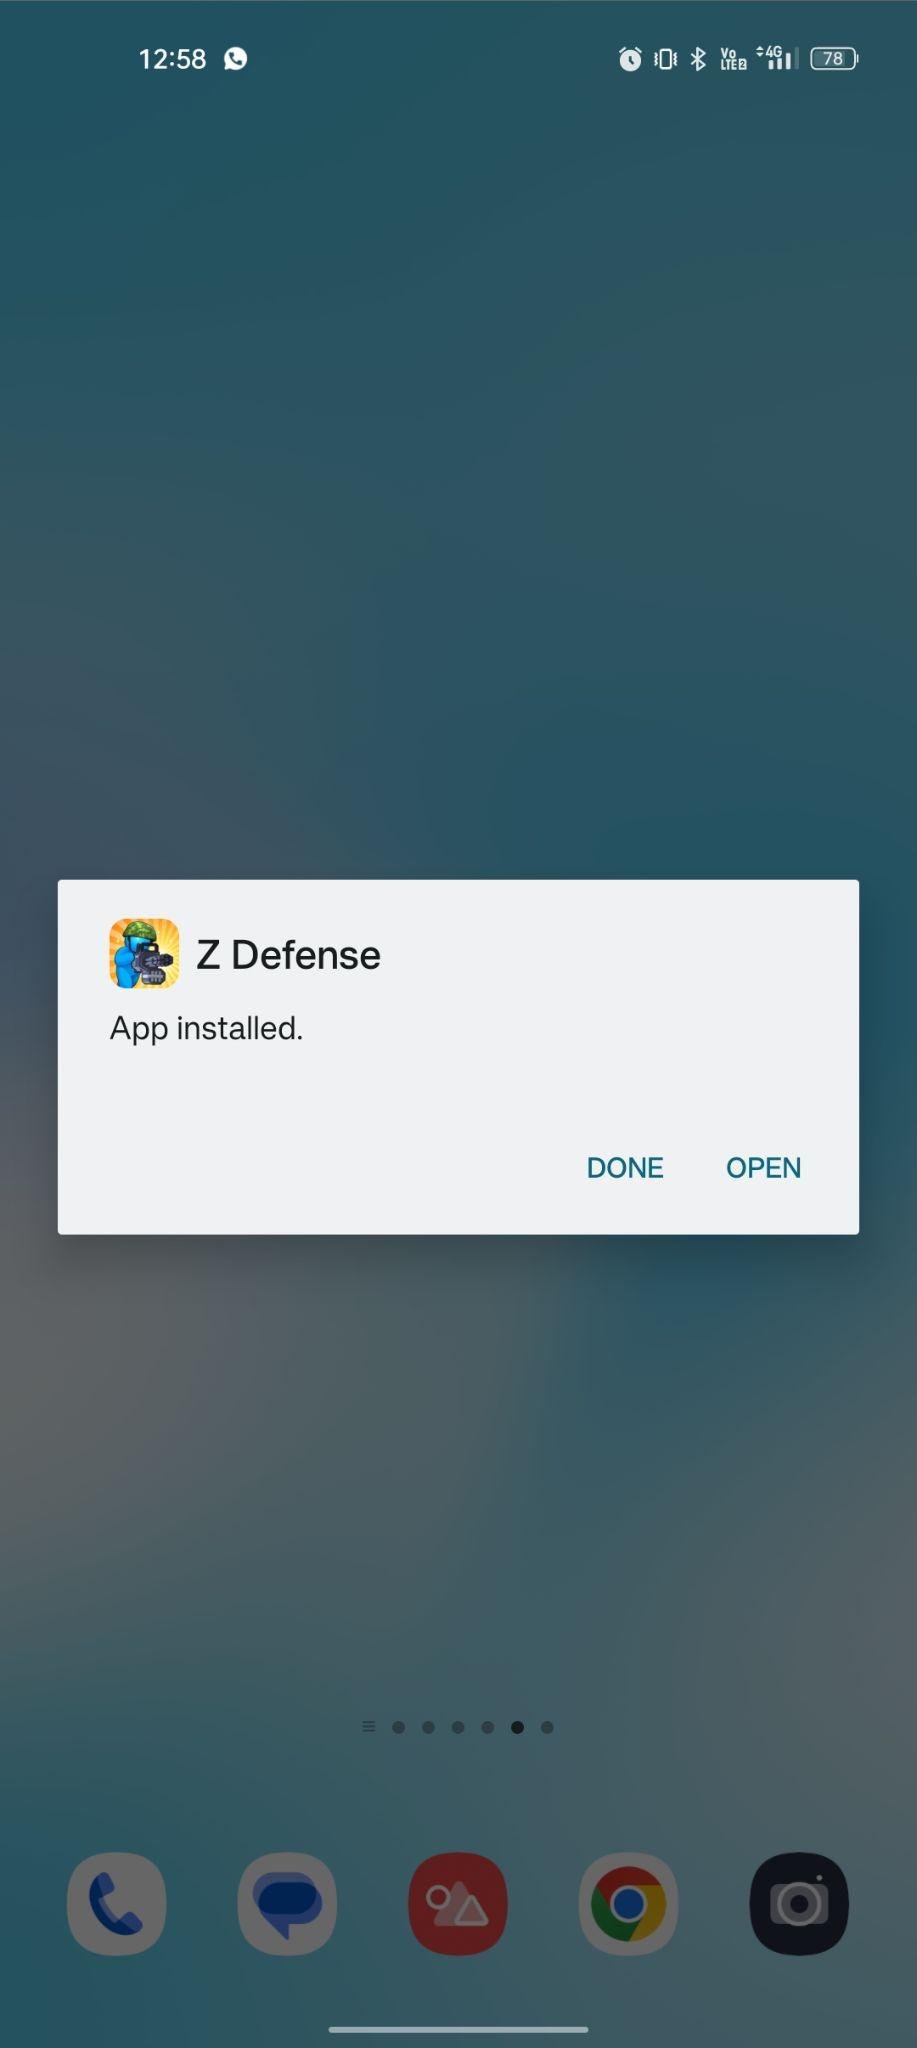 Z Defense apk installed